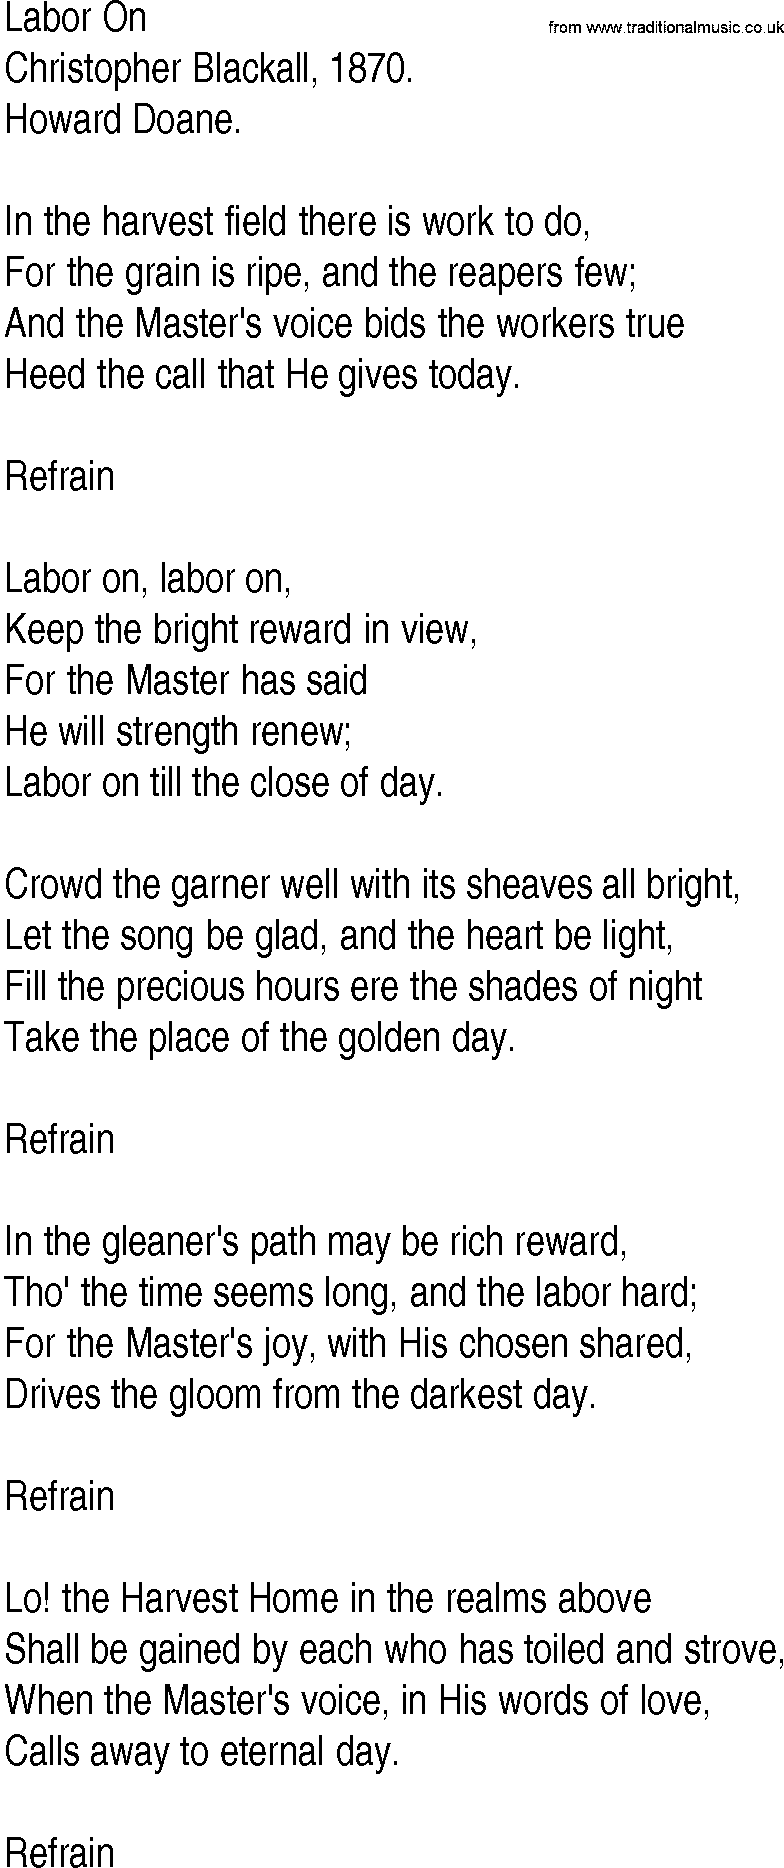 Hymn and Gospel Song: Labor On by Christopher Blackall lyrics